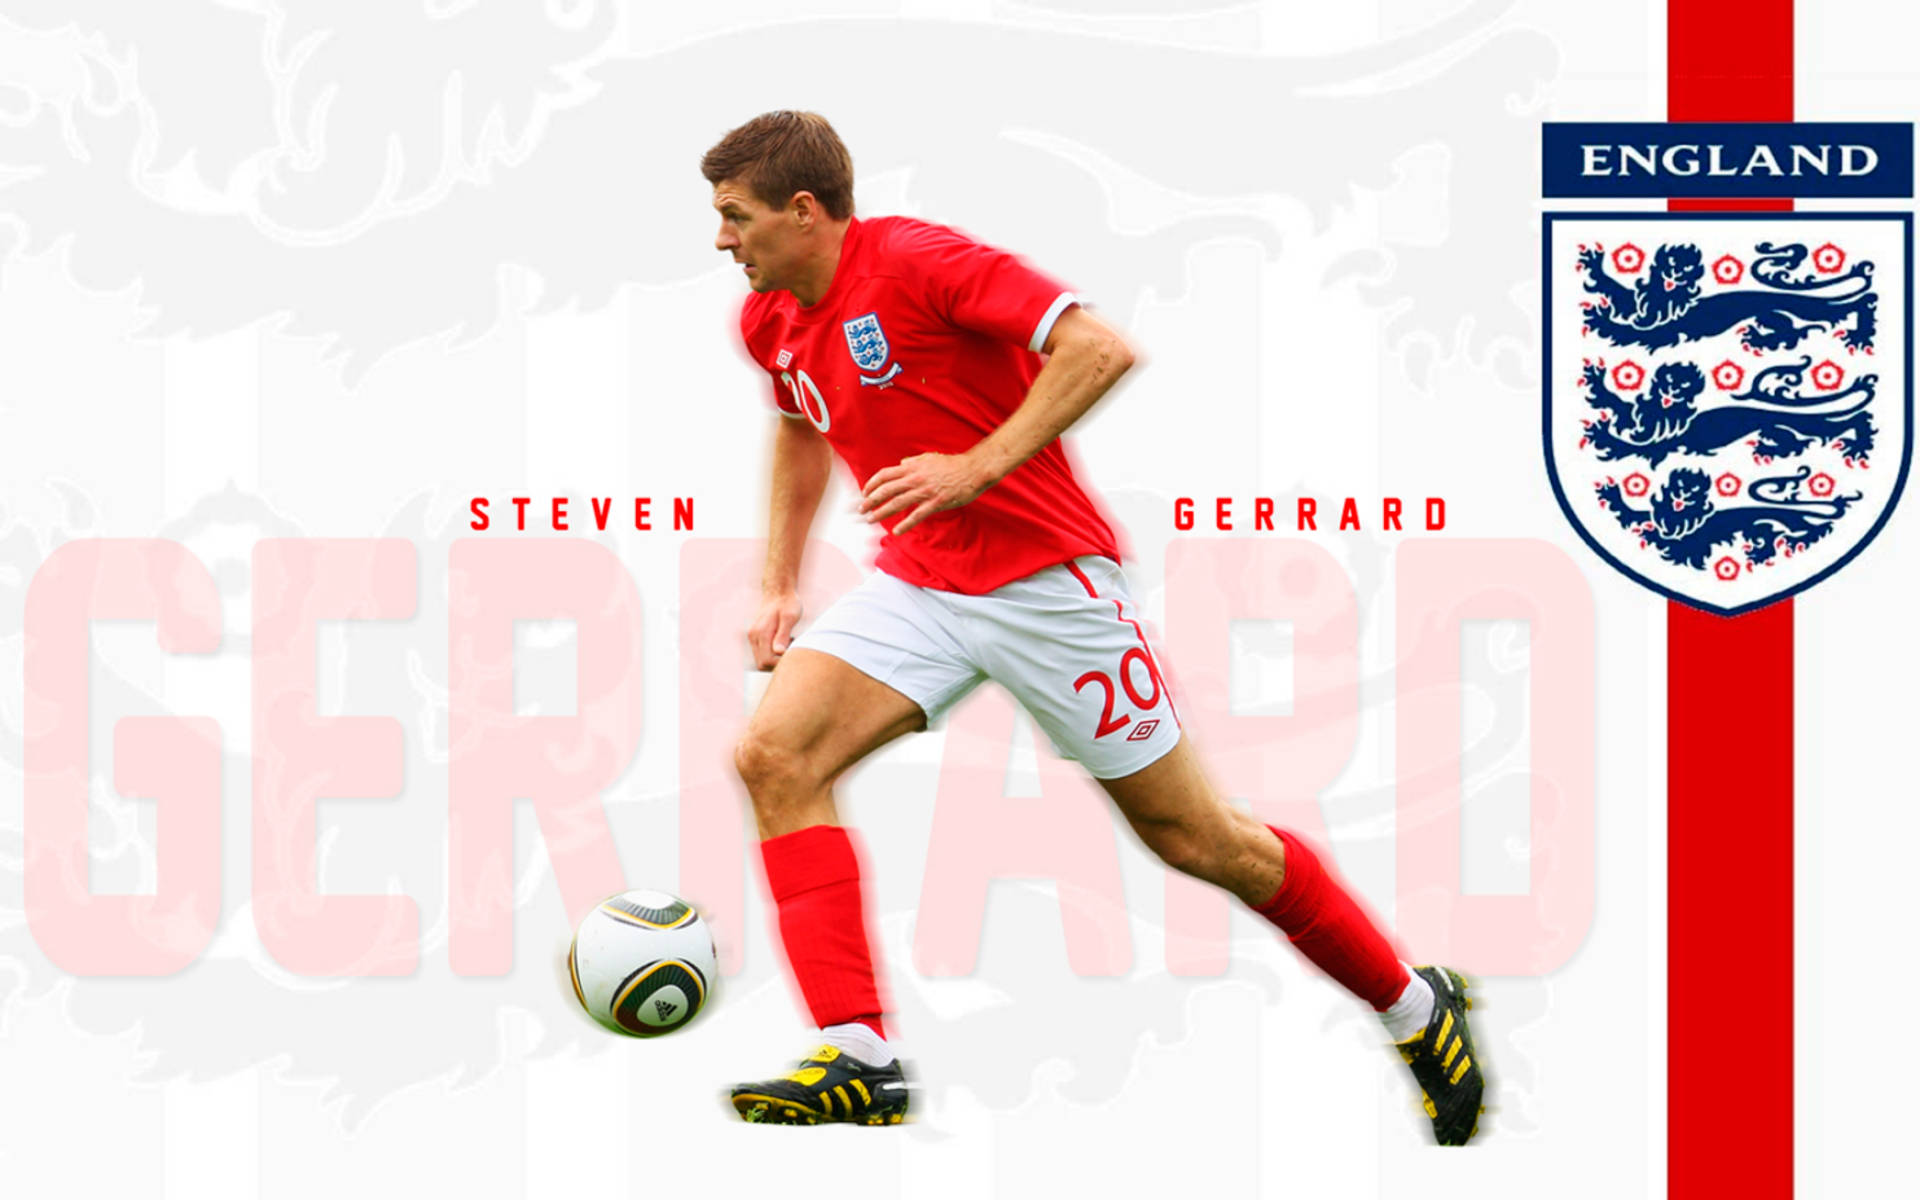 Steven Gerrard English Footballer Background